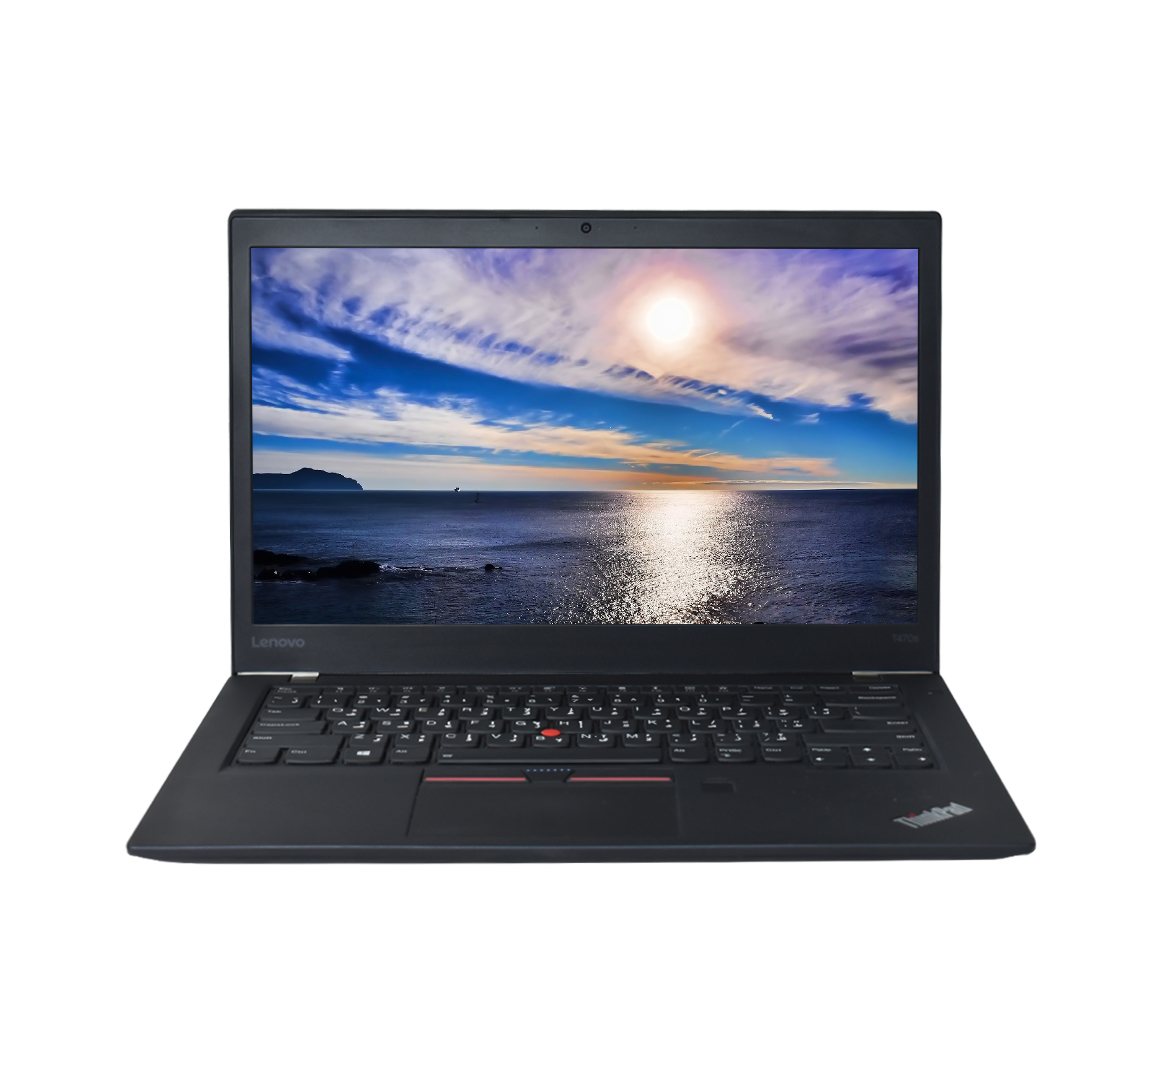 Lenovo ThinkPad T470s Light Weight Business Laptop, Intel Core i5 